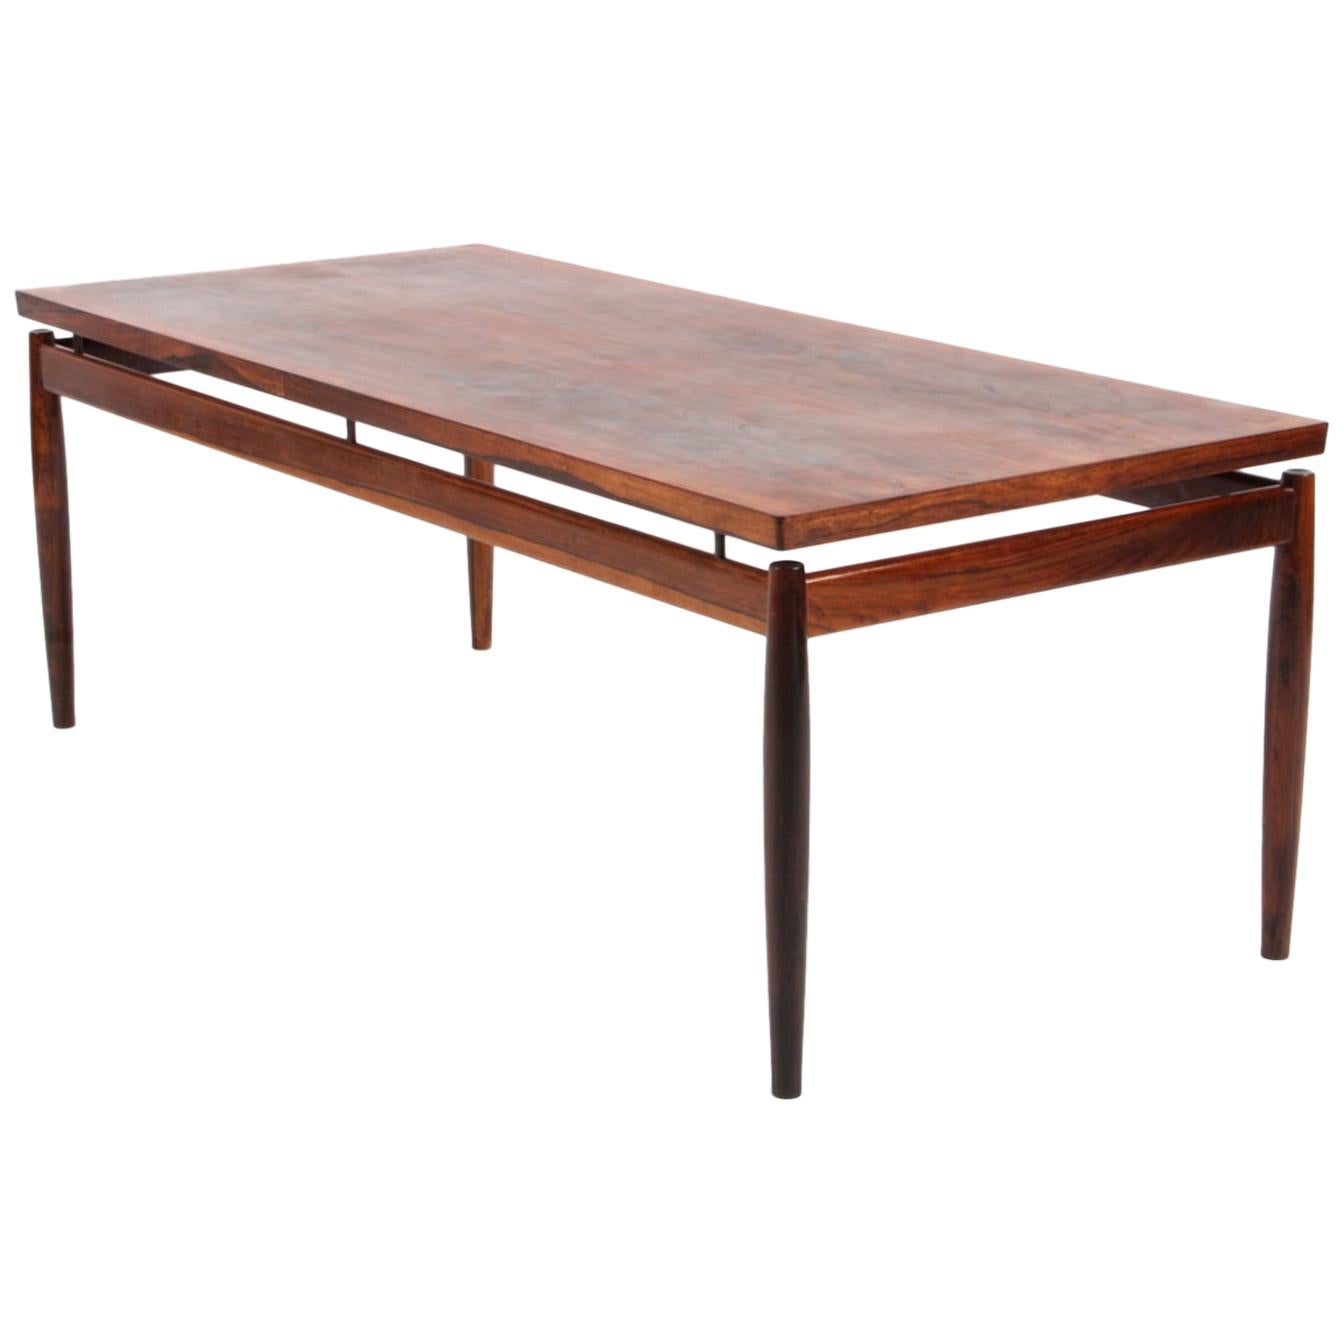 Grete Jalk Sofa Table, Model 622 / 54, in Rosewood. France & Son, 1960s